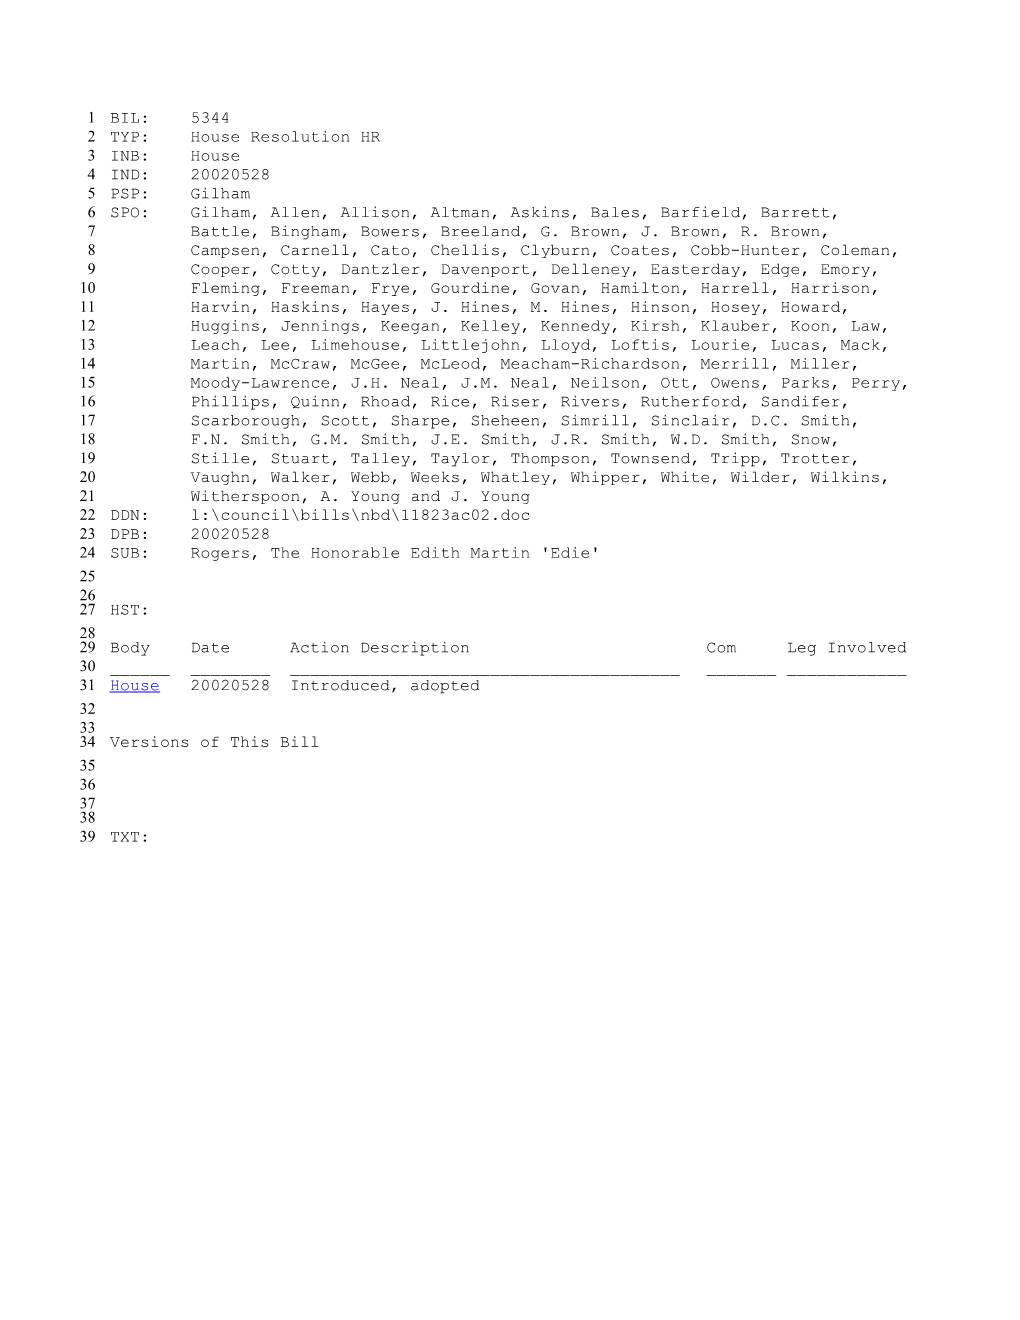 2001-2002 Bill 5344: Rogers, the Honorable Edith Martin 'Edie' - South Carolina Legislature